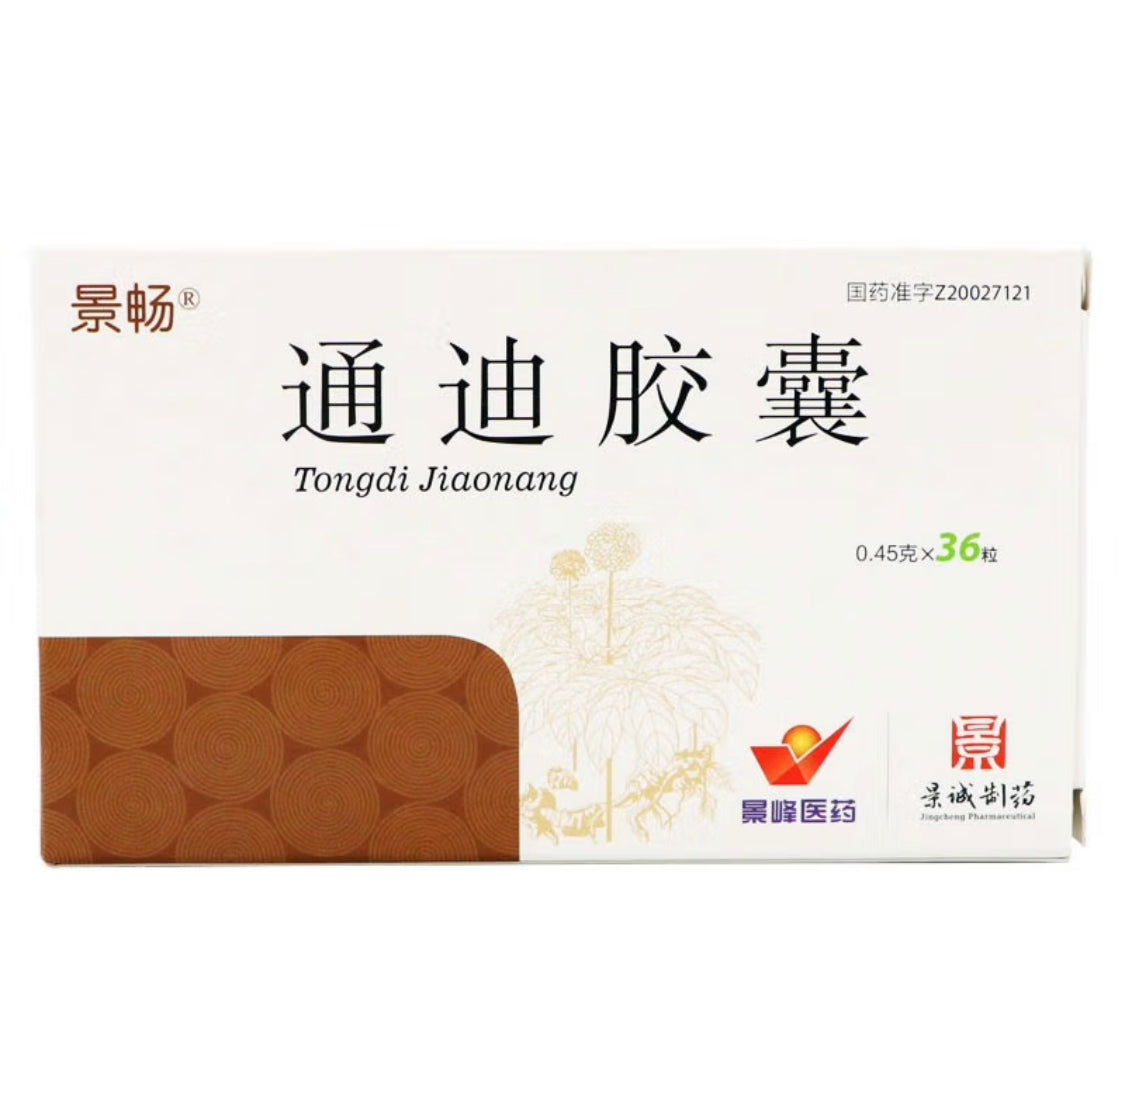 Natural Herbal Tongdi Jiaonang / Tong Di Jiao Nang / Tongdi Capsule / Tong Di Capsule